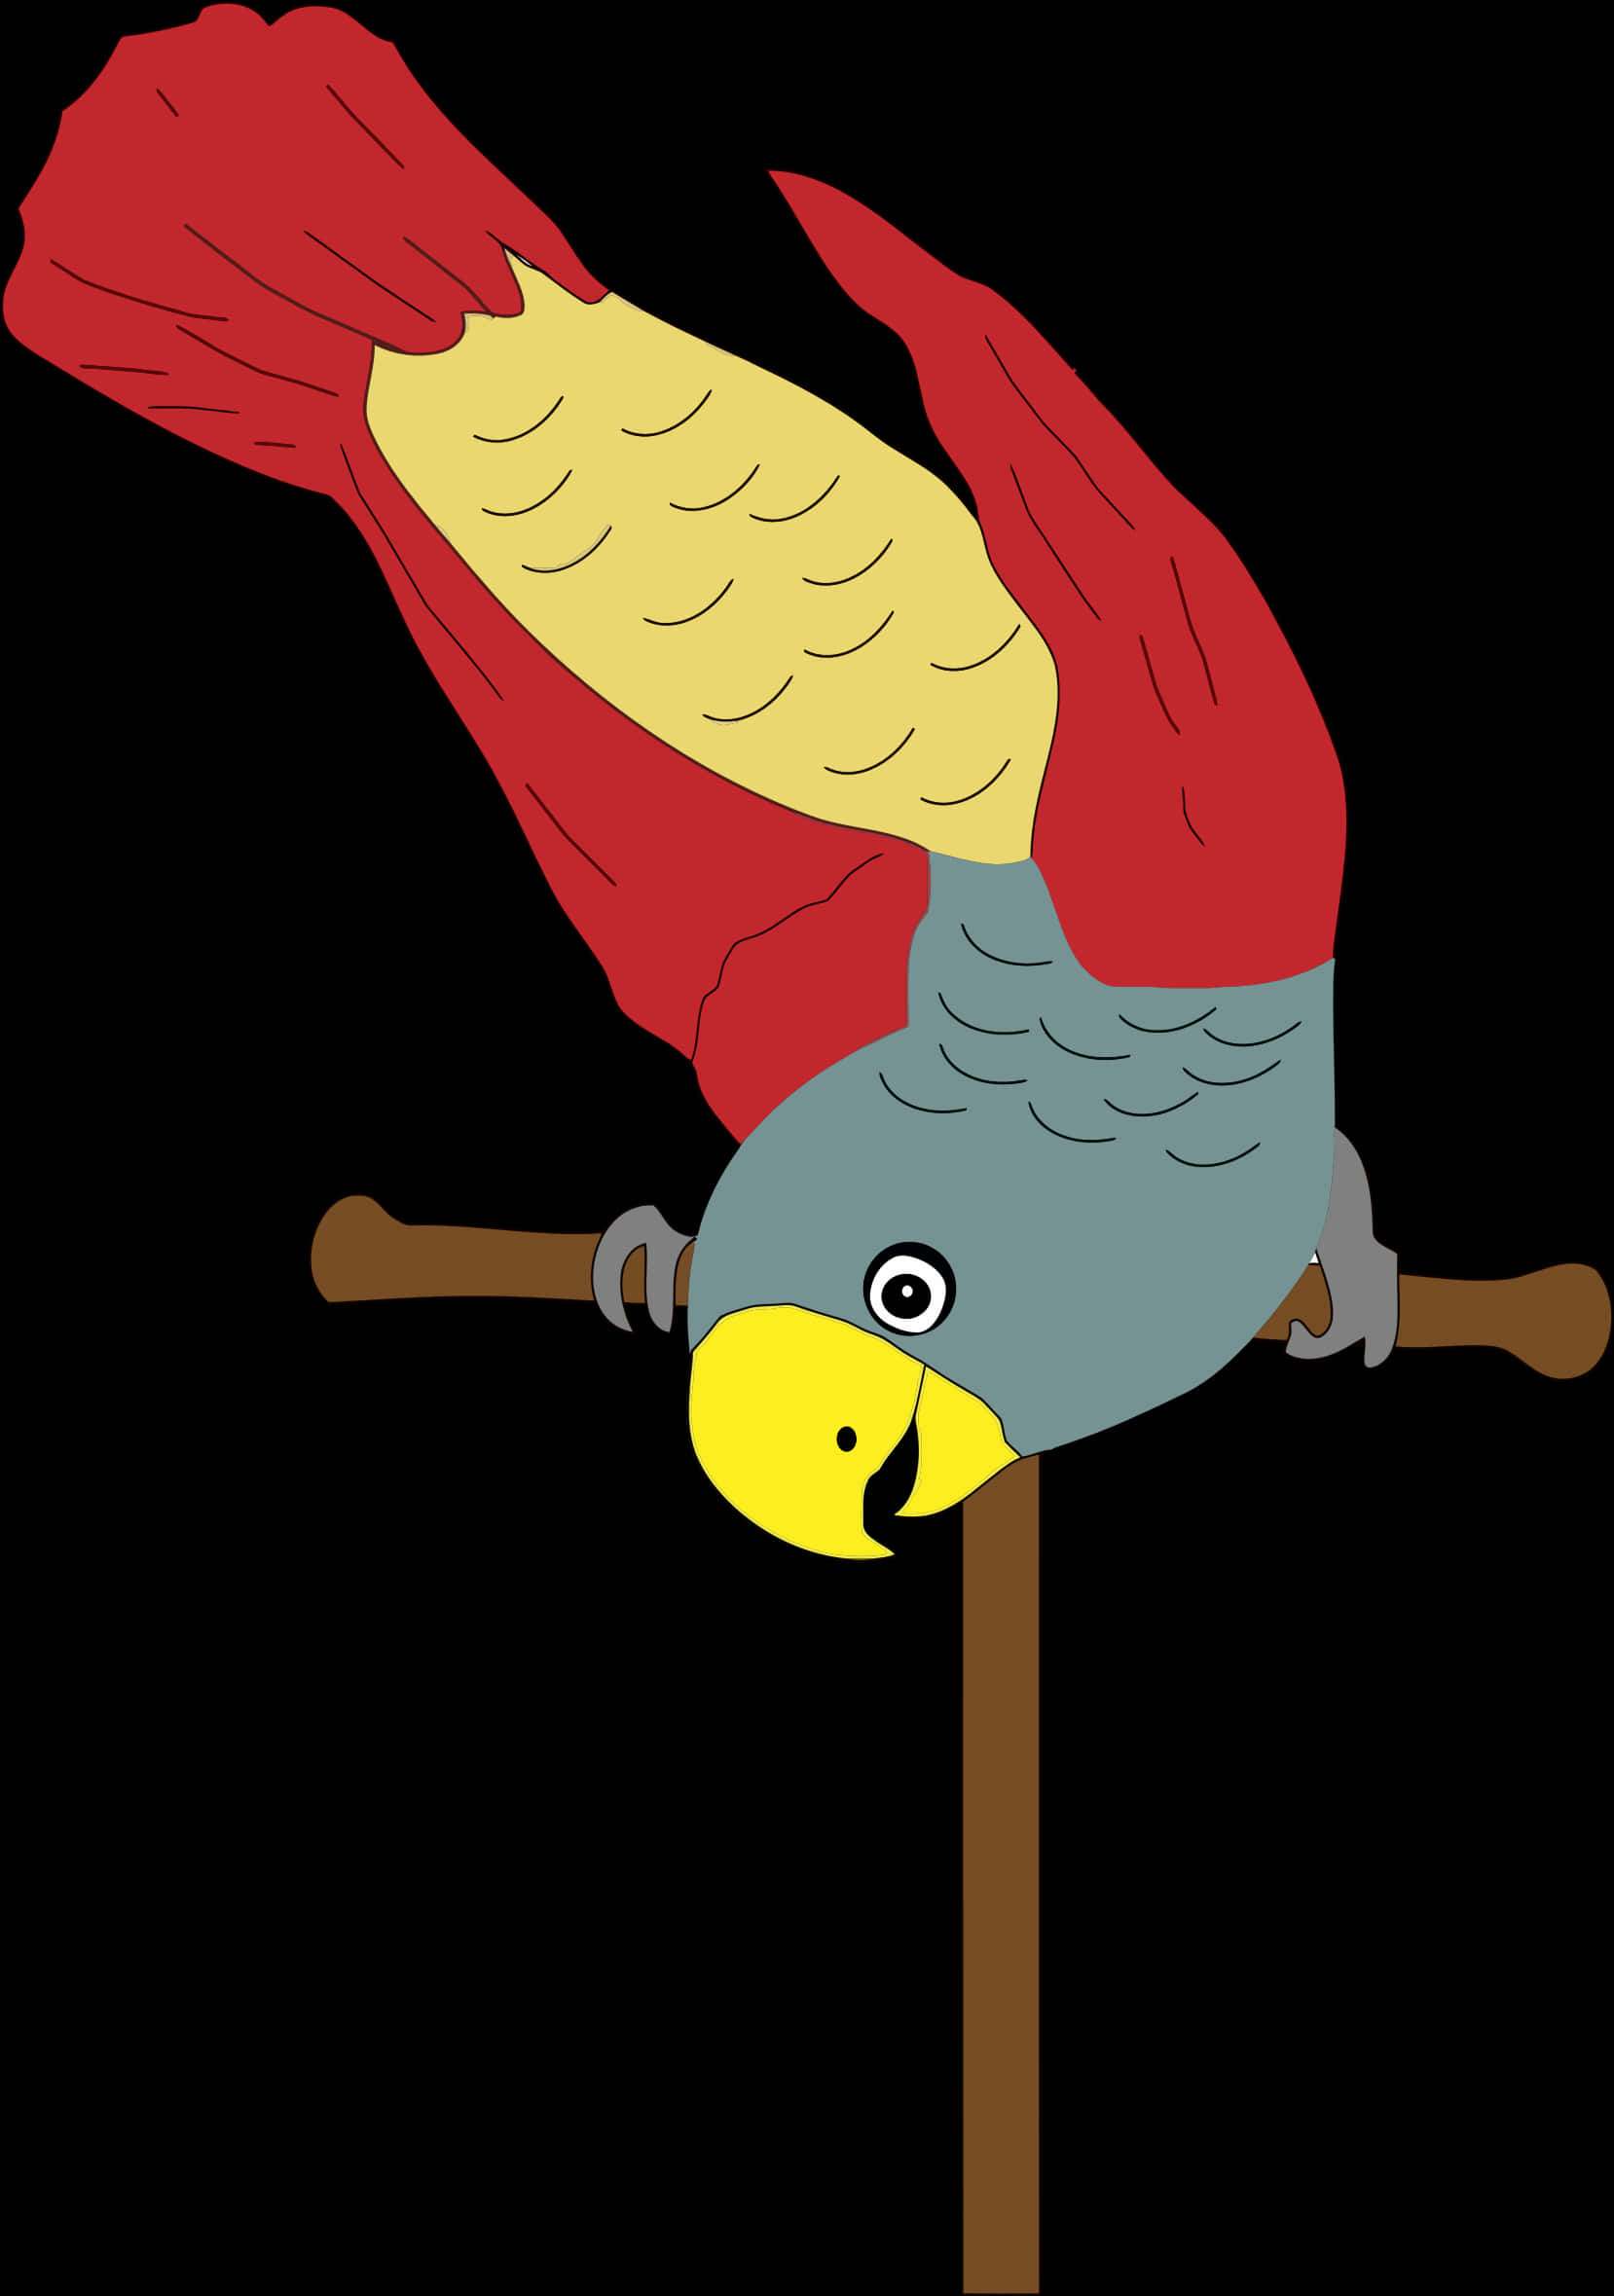 Colorful Parrot Illustration PNG